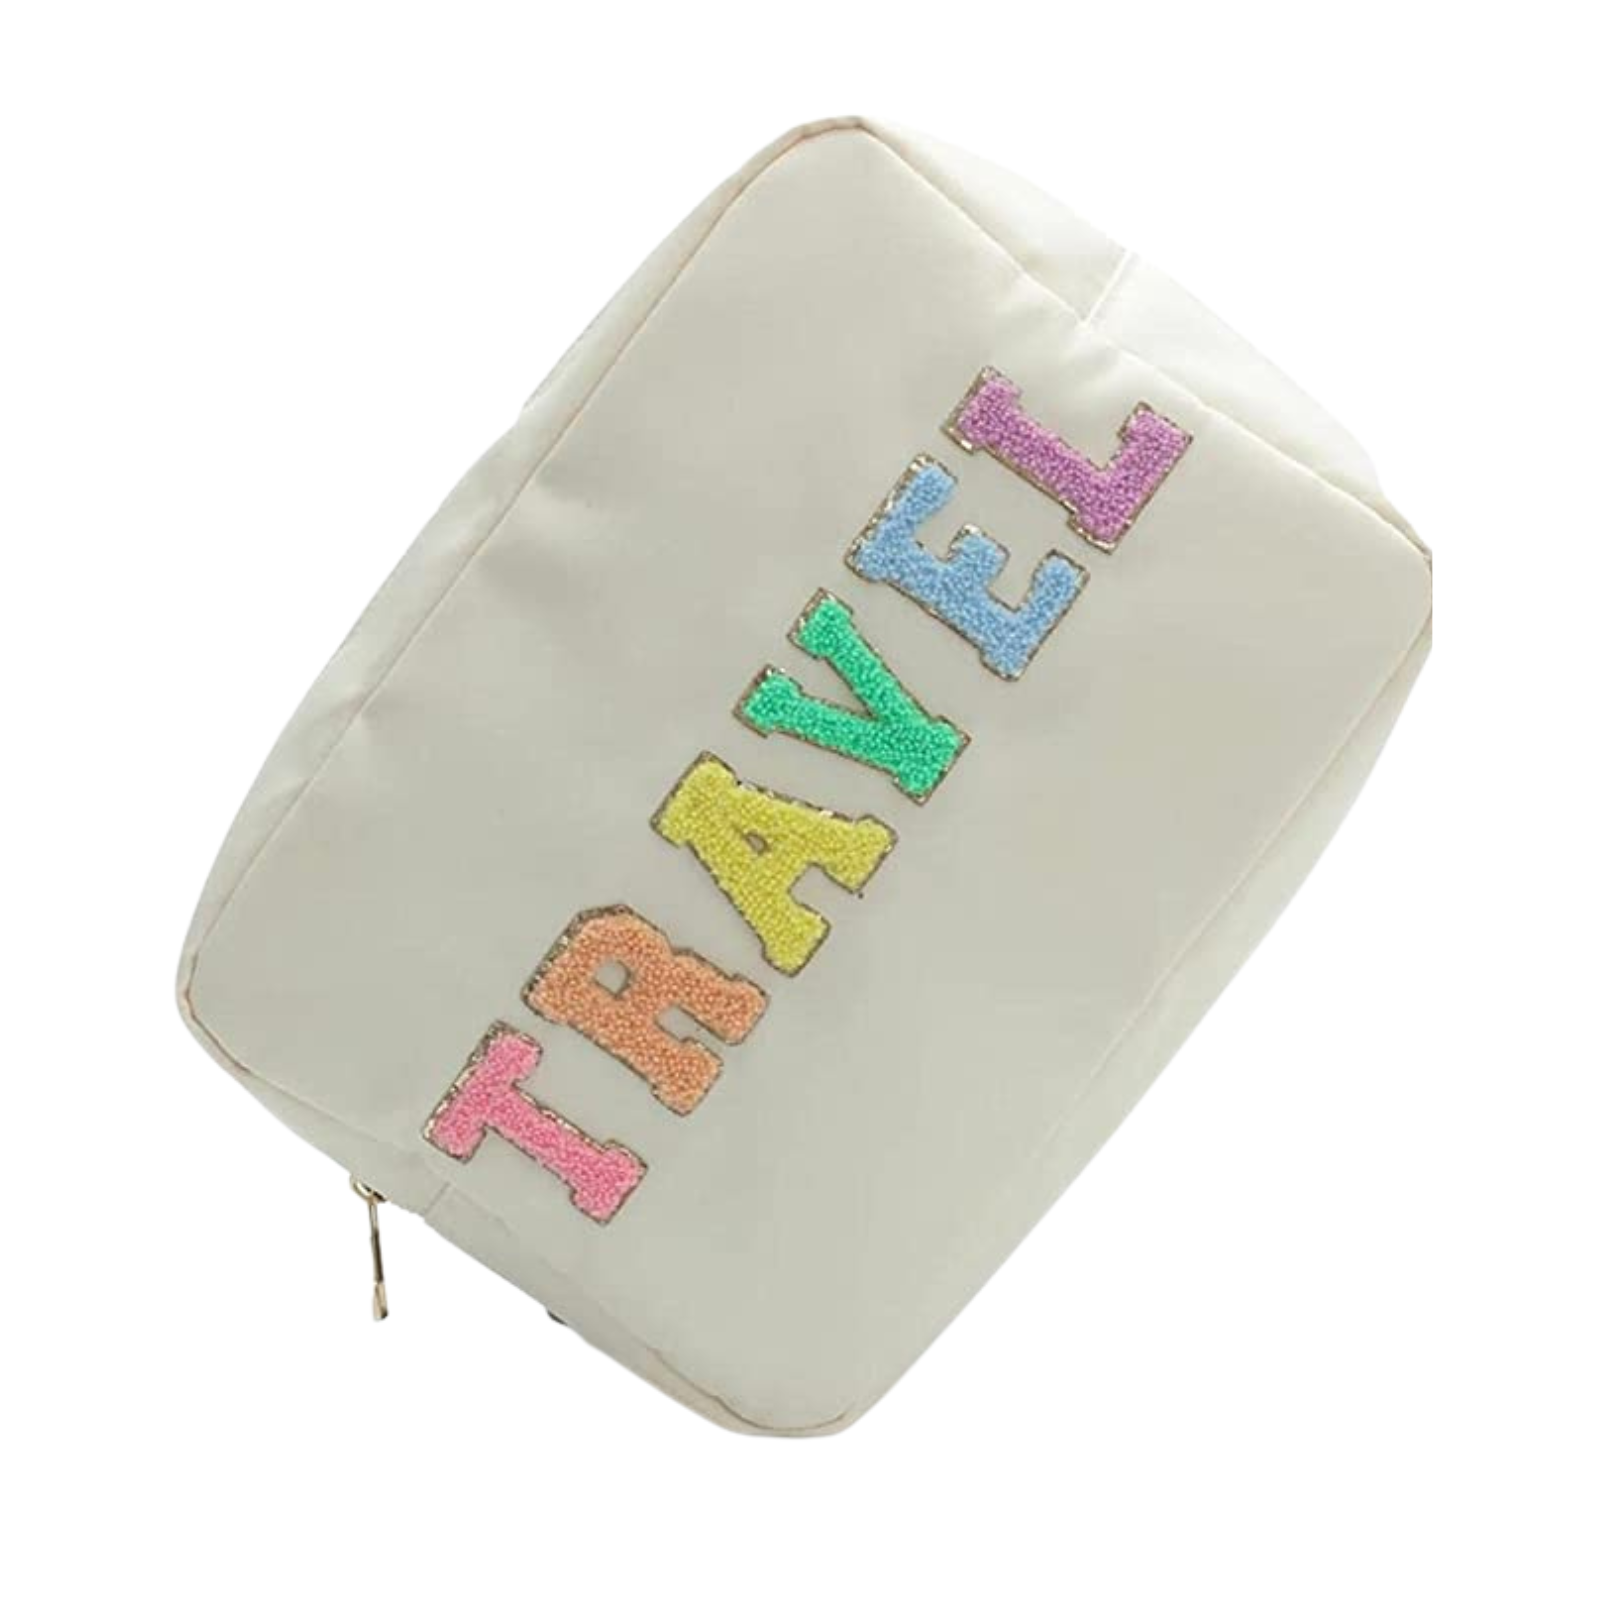 Travel Large Nylon Bag (Cream)